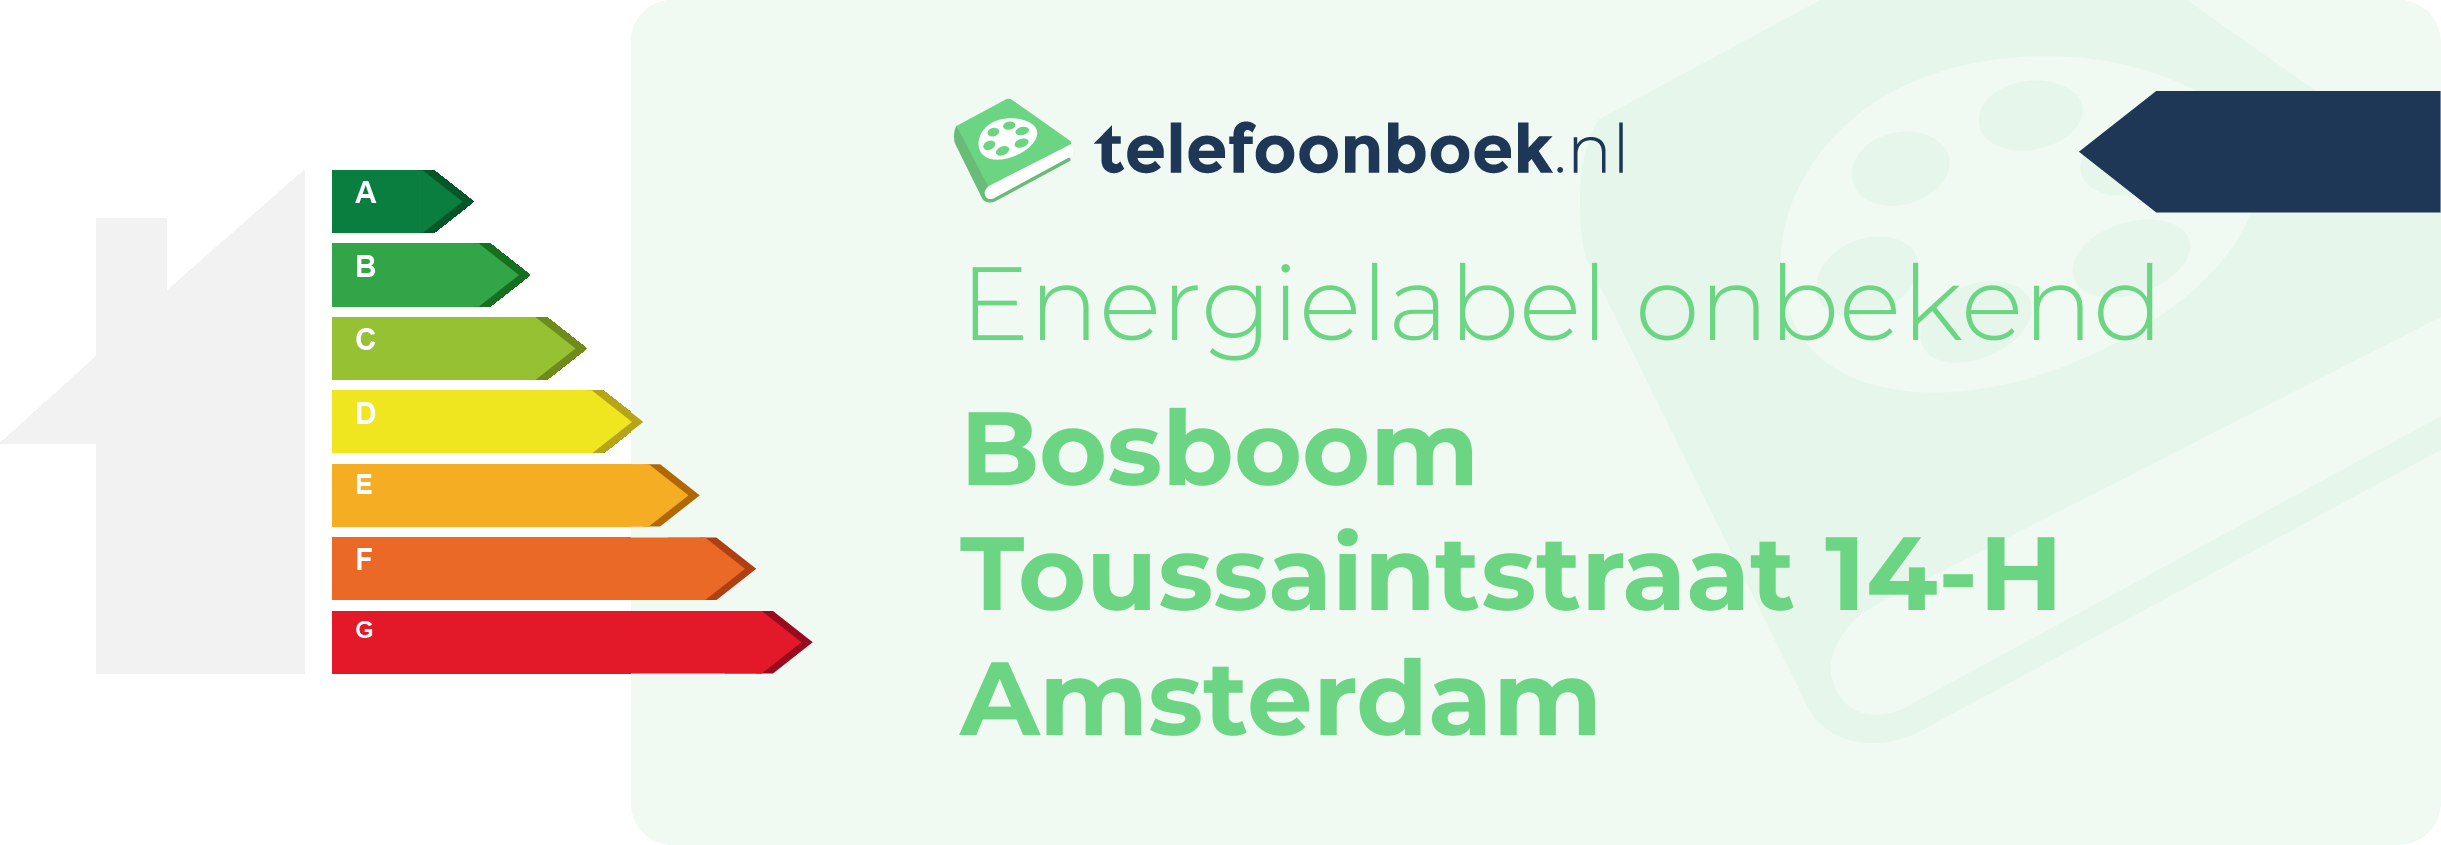 Energielabel Bosboom Toussaintstraat 14-H Amsterdam